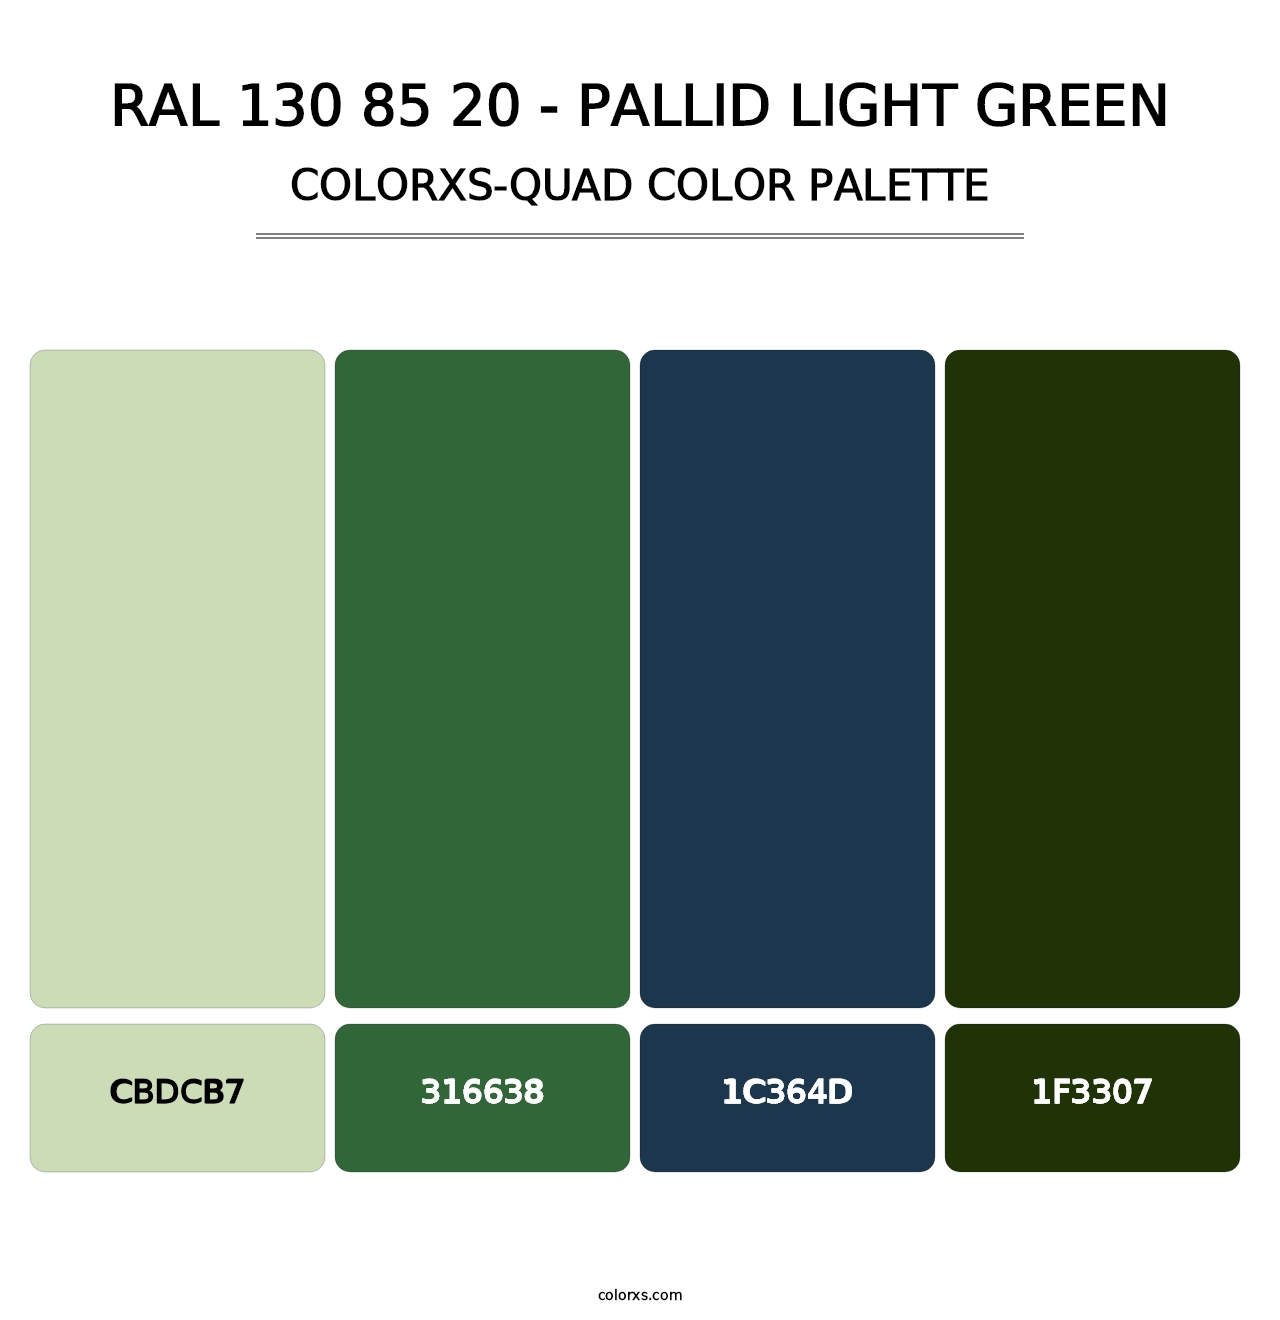 RAL 130 85 20 - Pallid Light Green - Colorxs Quad Palette